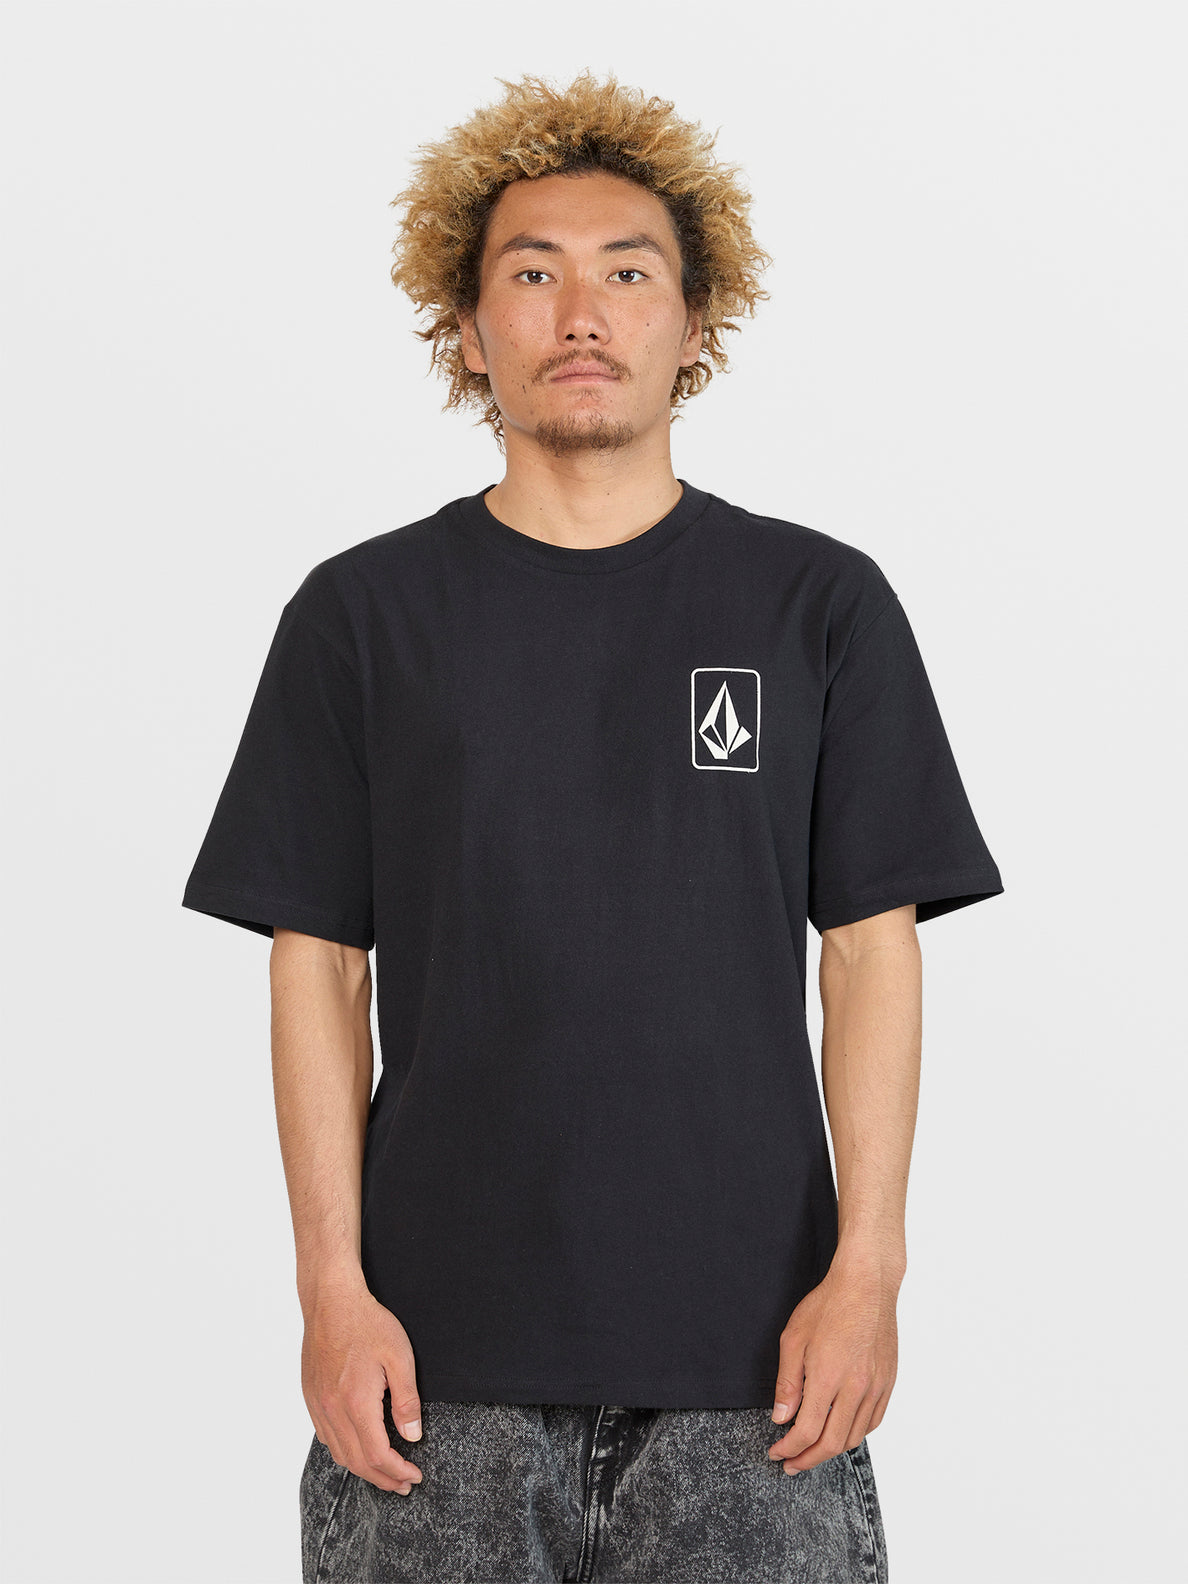 Skate Vitals Originator Short Sleeve Tee Shirt - Black